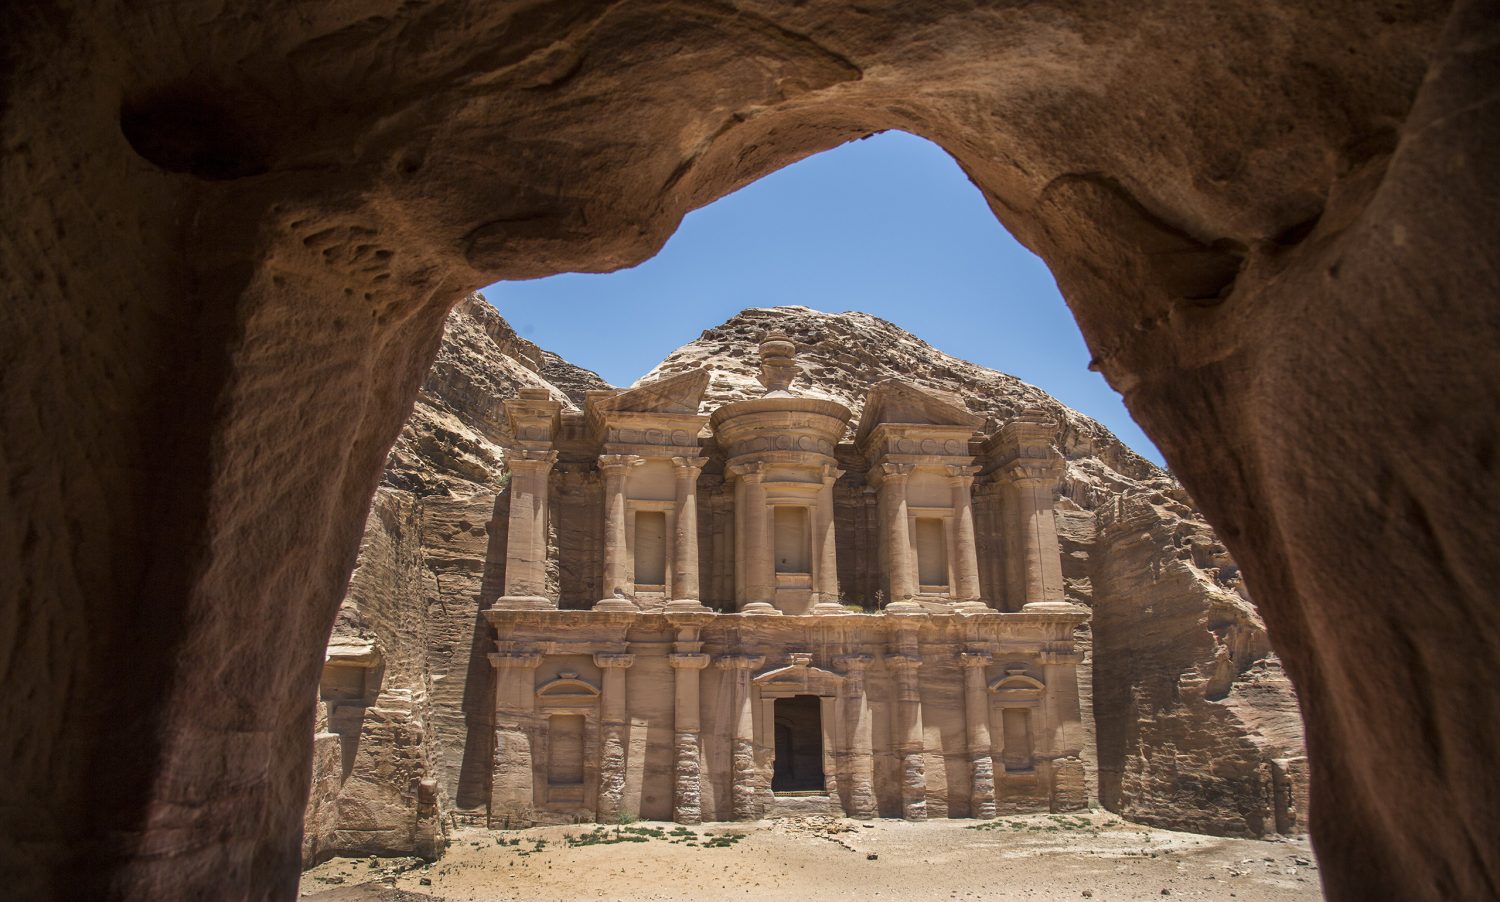 Ad Deir monument in Petra, Jordan